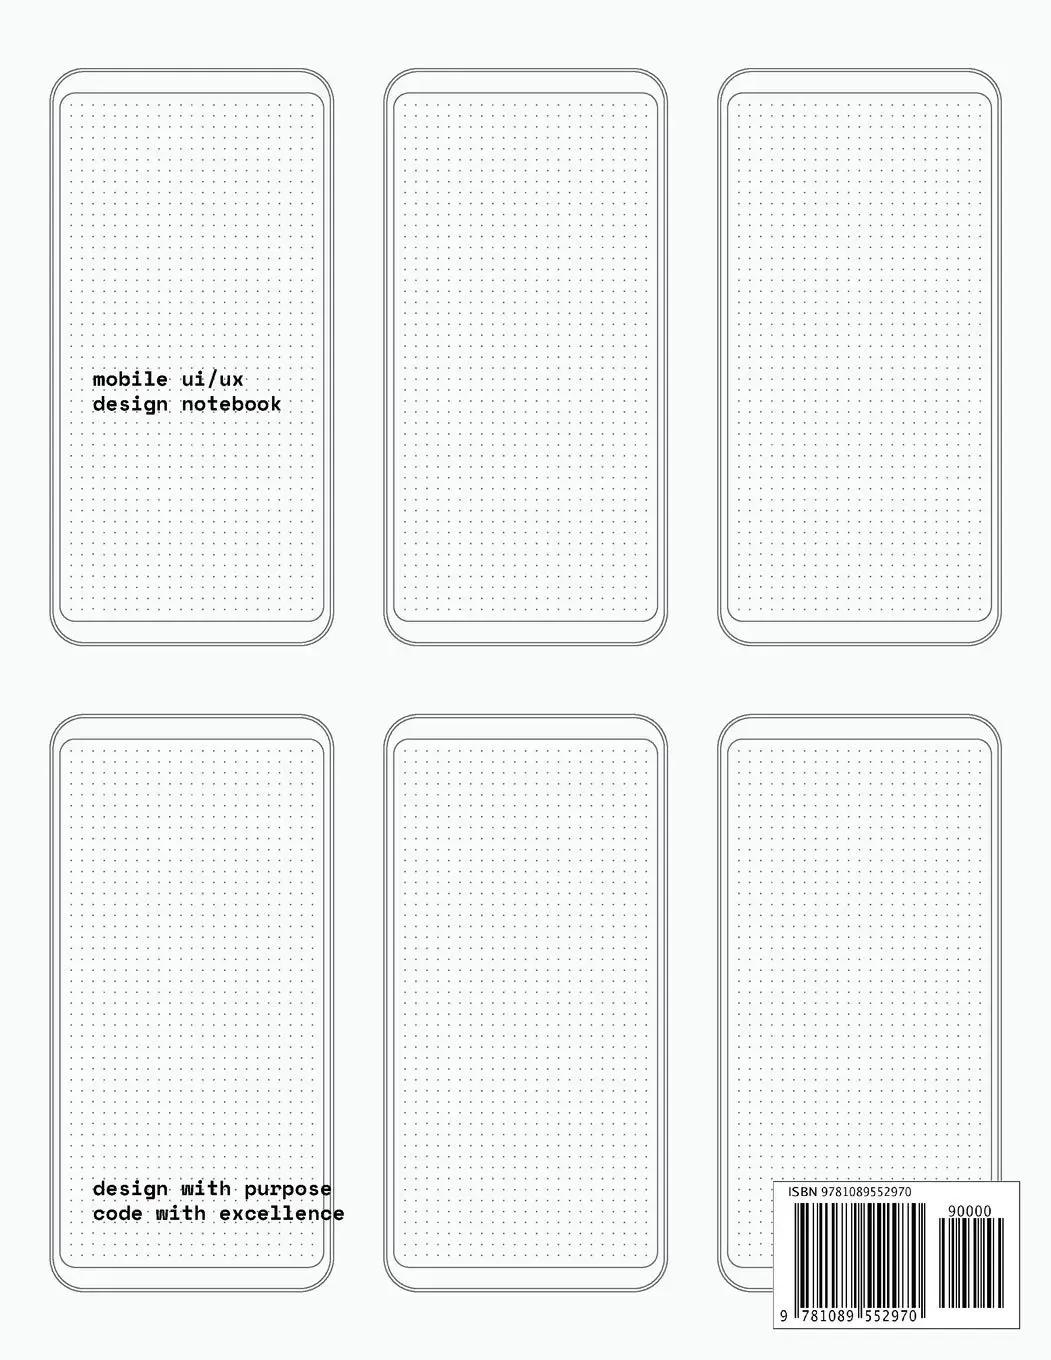 Blogduwebdesign idees cadeaux web designer mobile ui ux design notebook 2